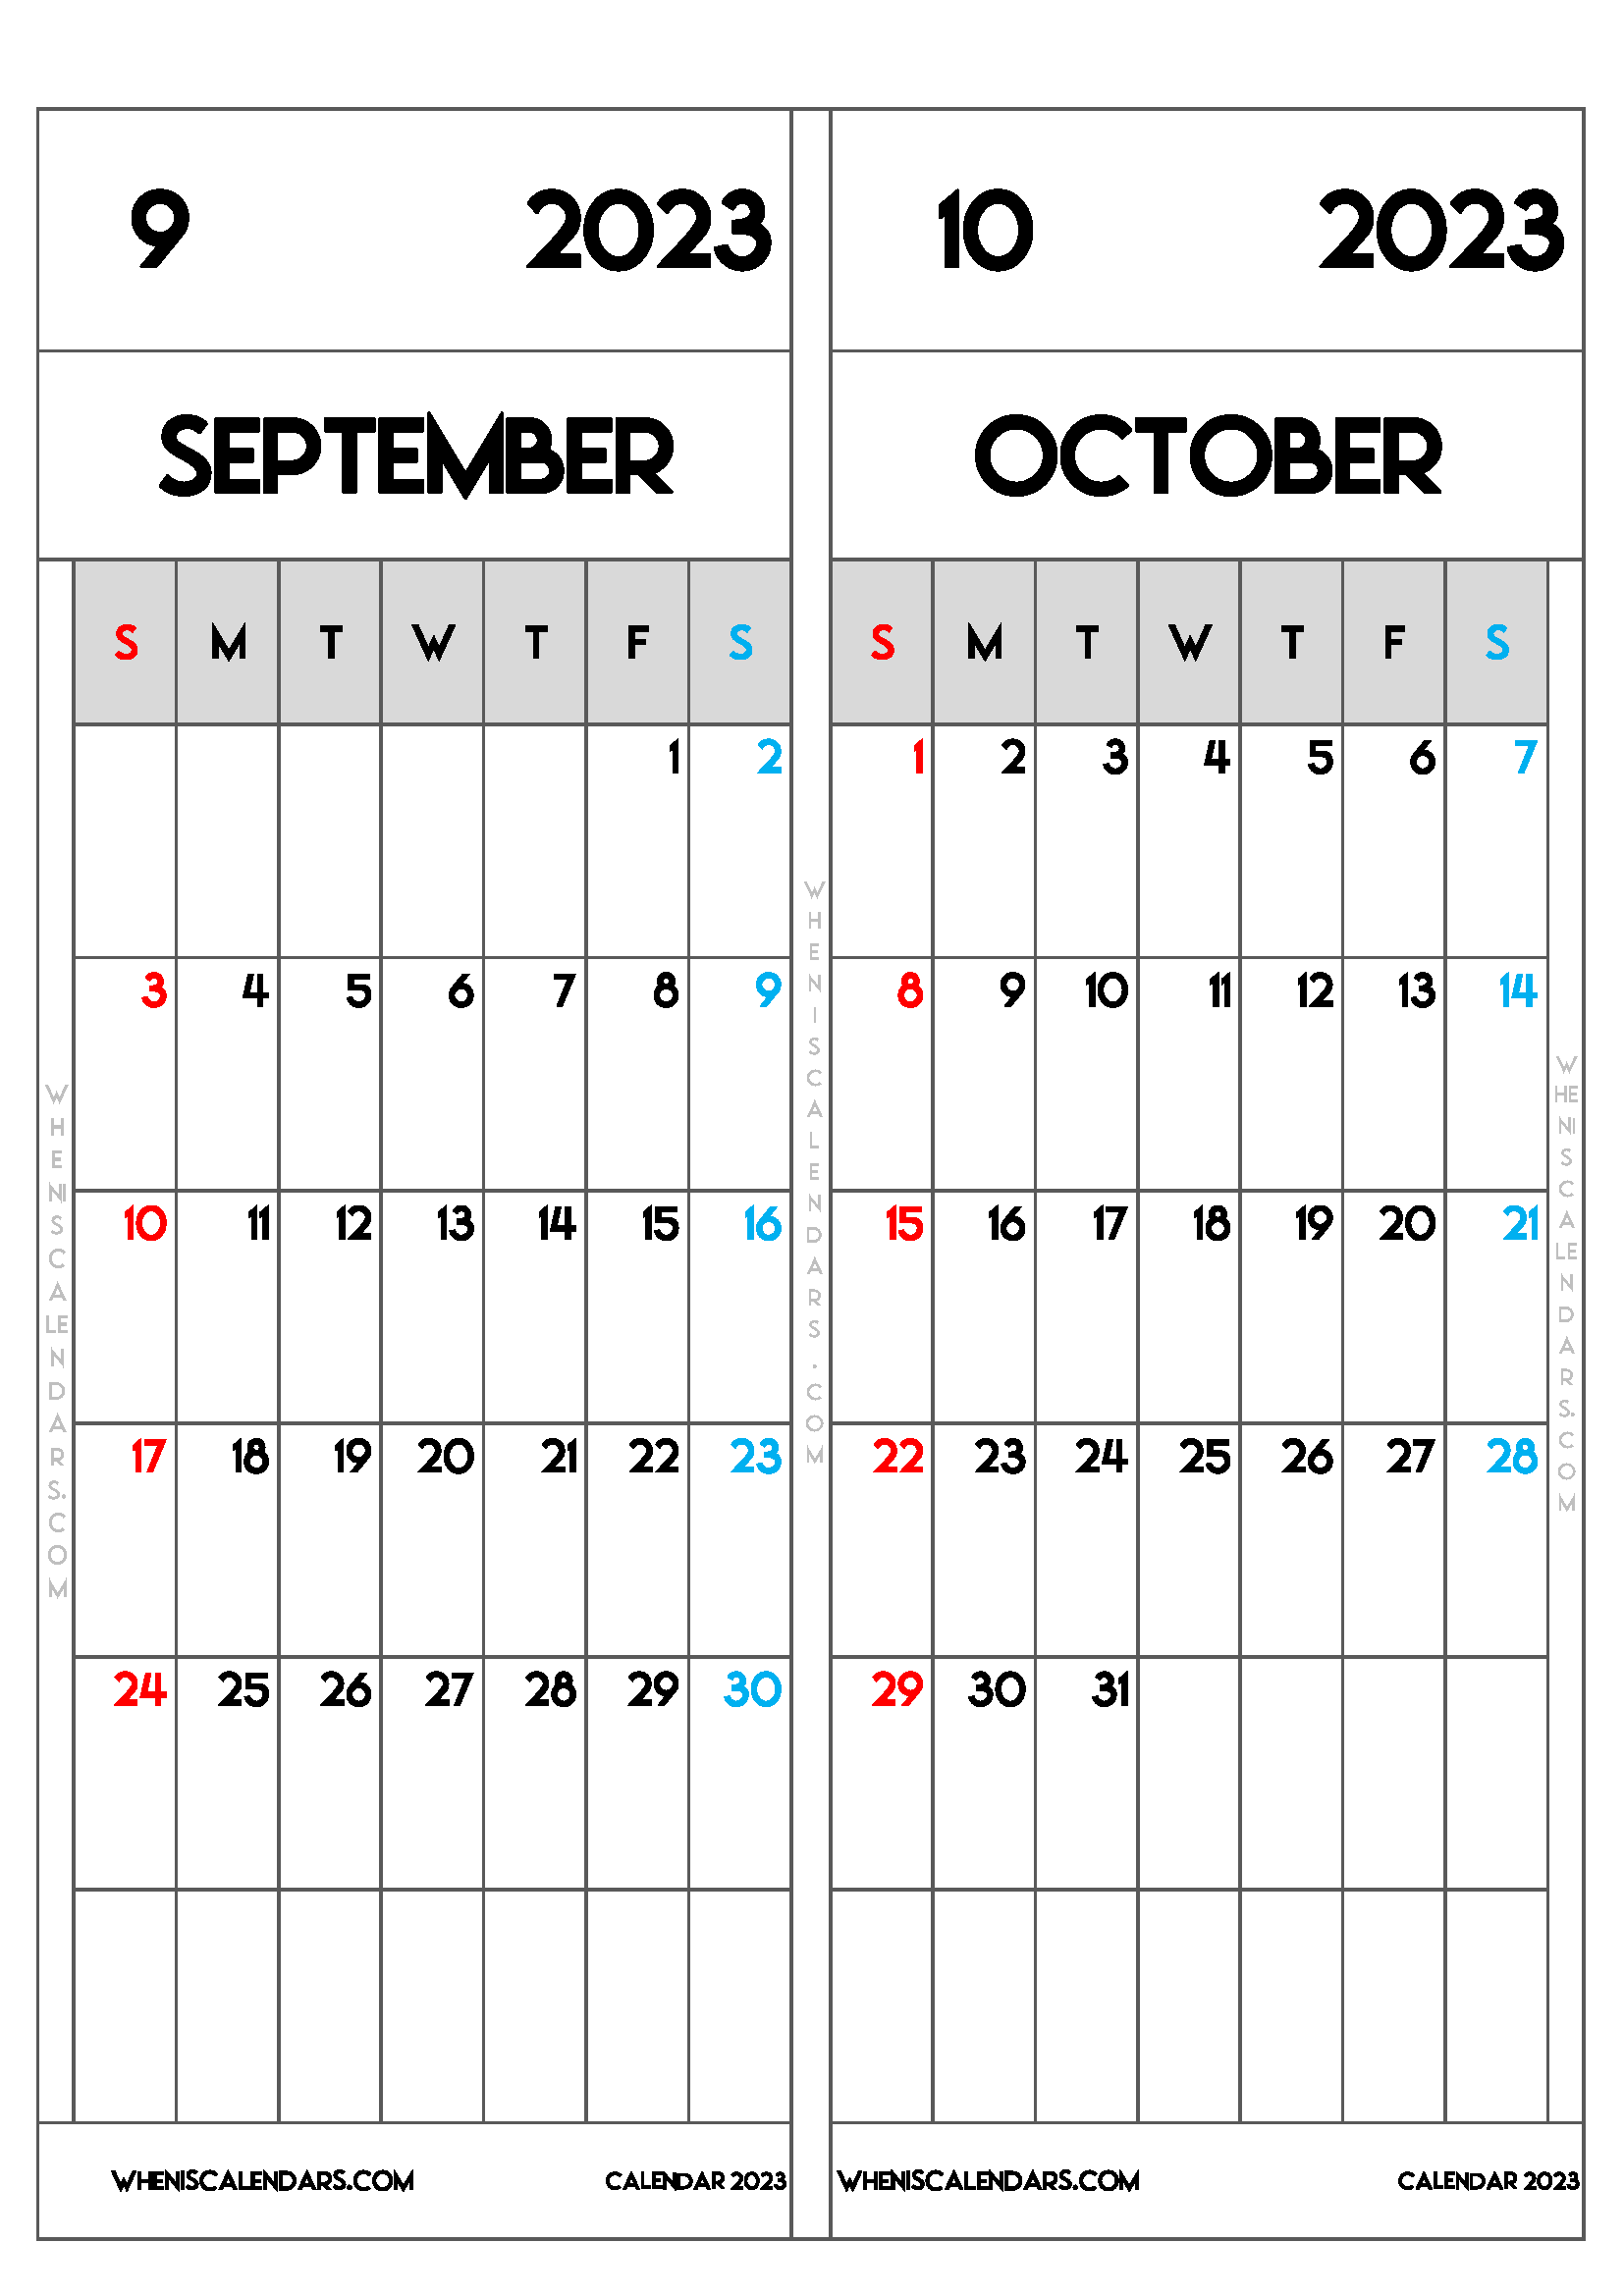 Download Free September October 2023 Calendar Printable as PDF and PNG Image